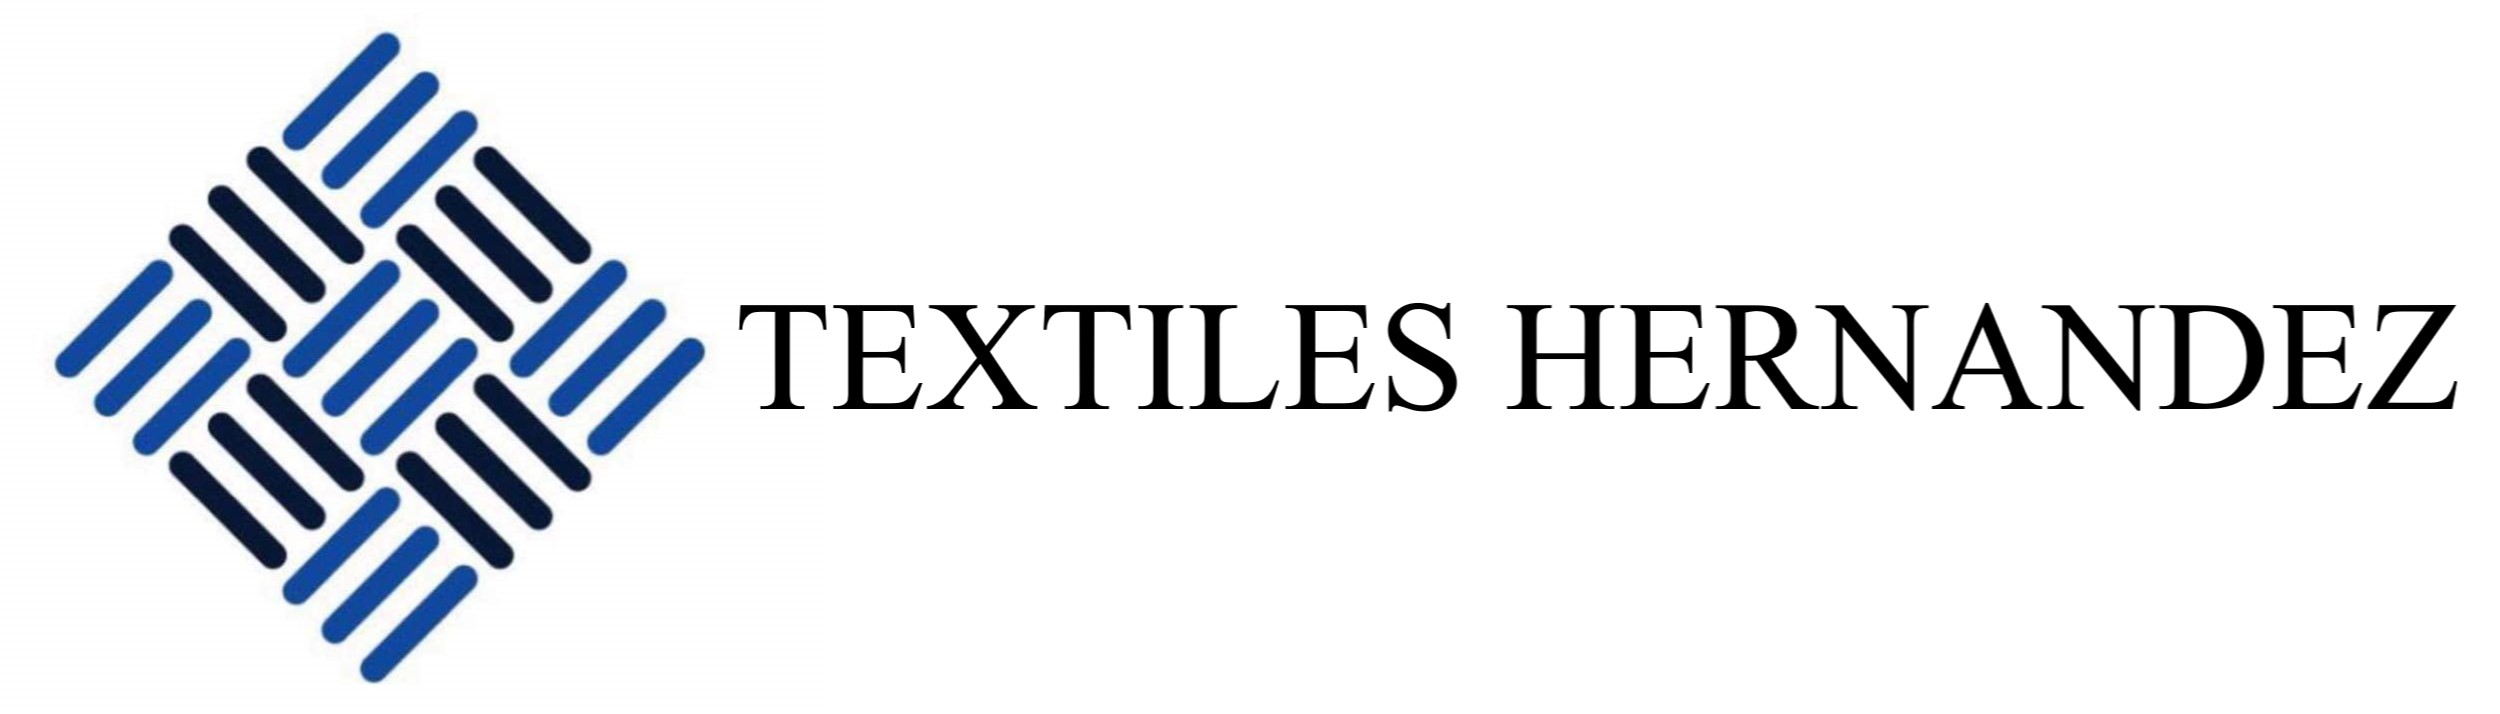 Textiles Hernandez